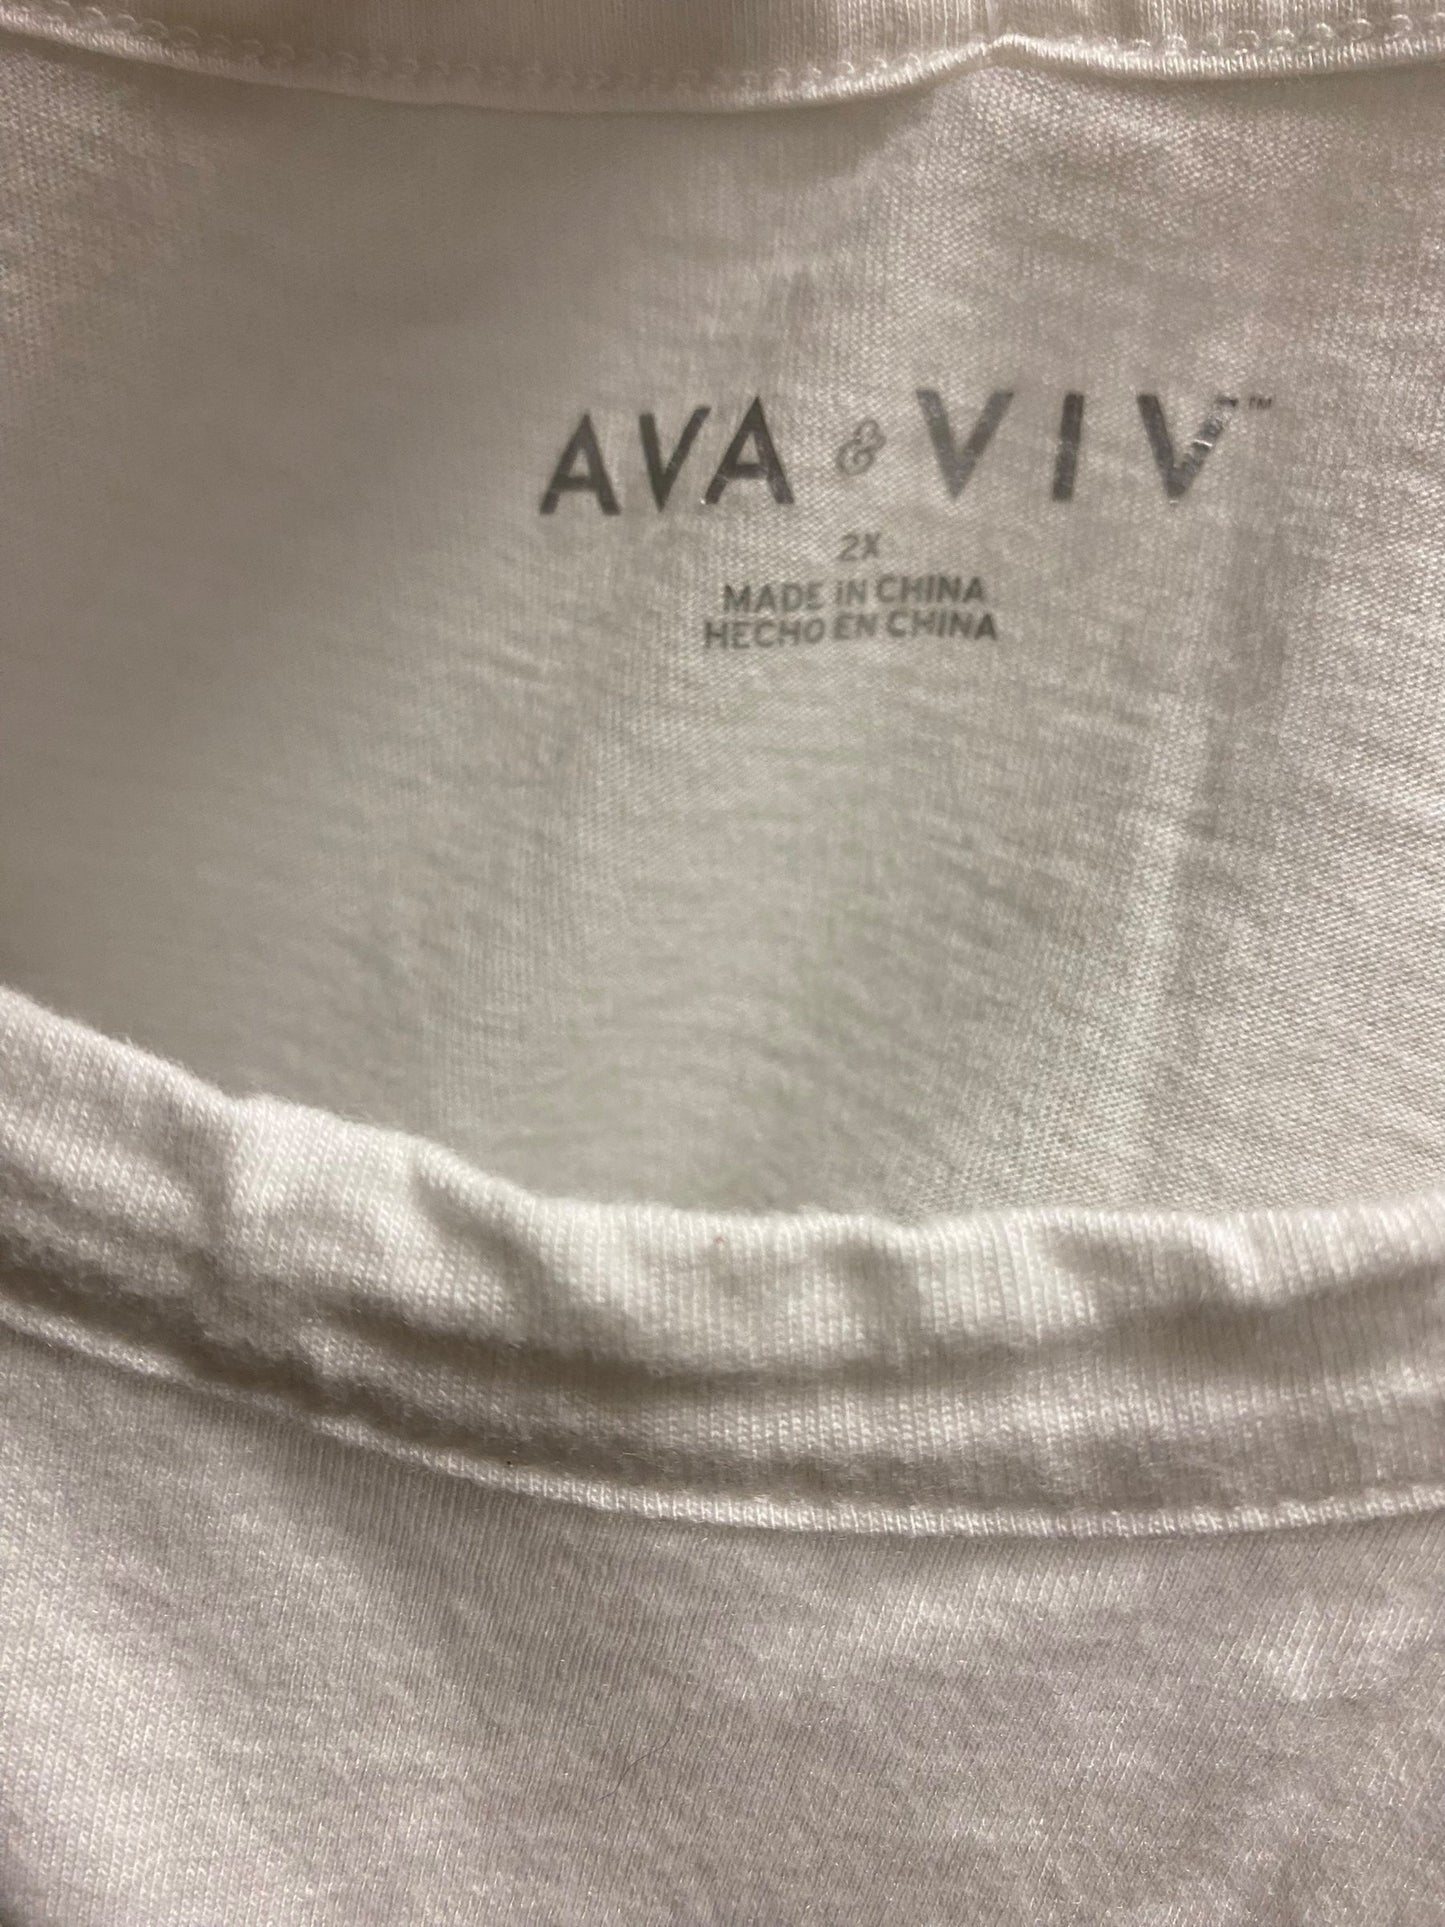 White Top Short Sleeve Ava & Viv, Size 2x